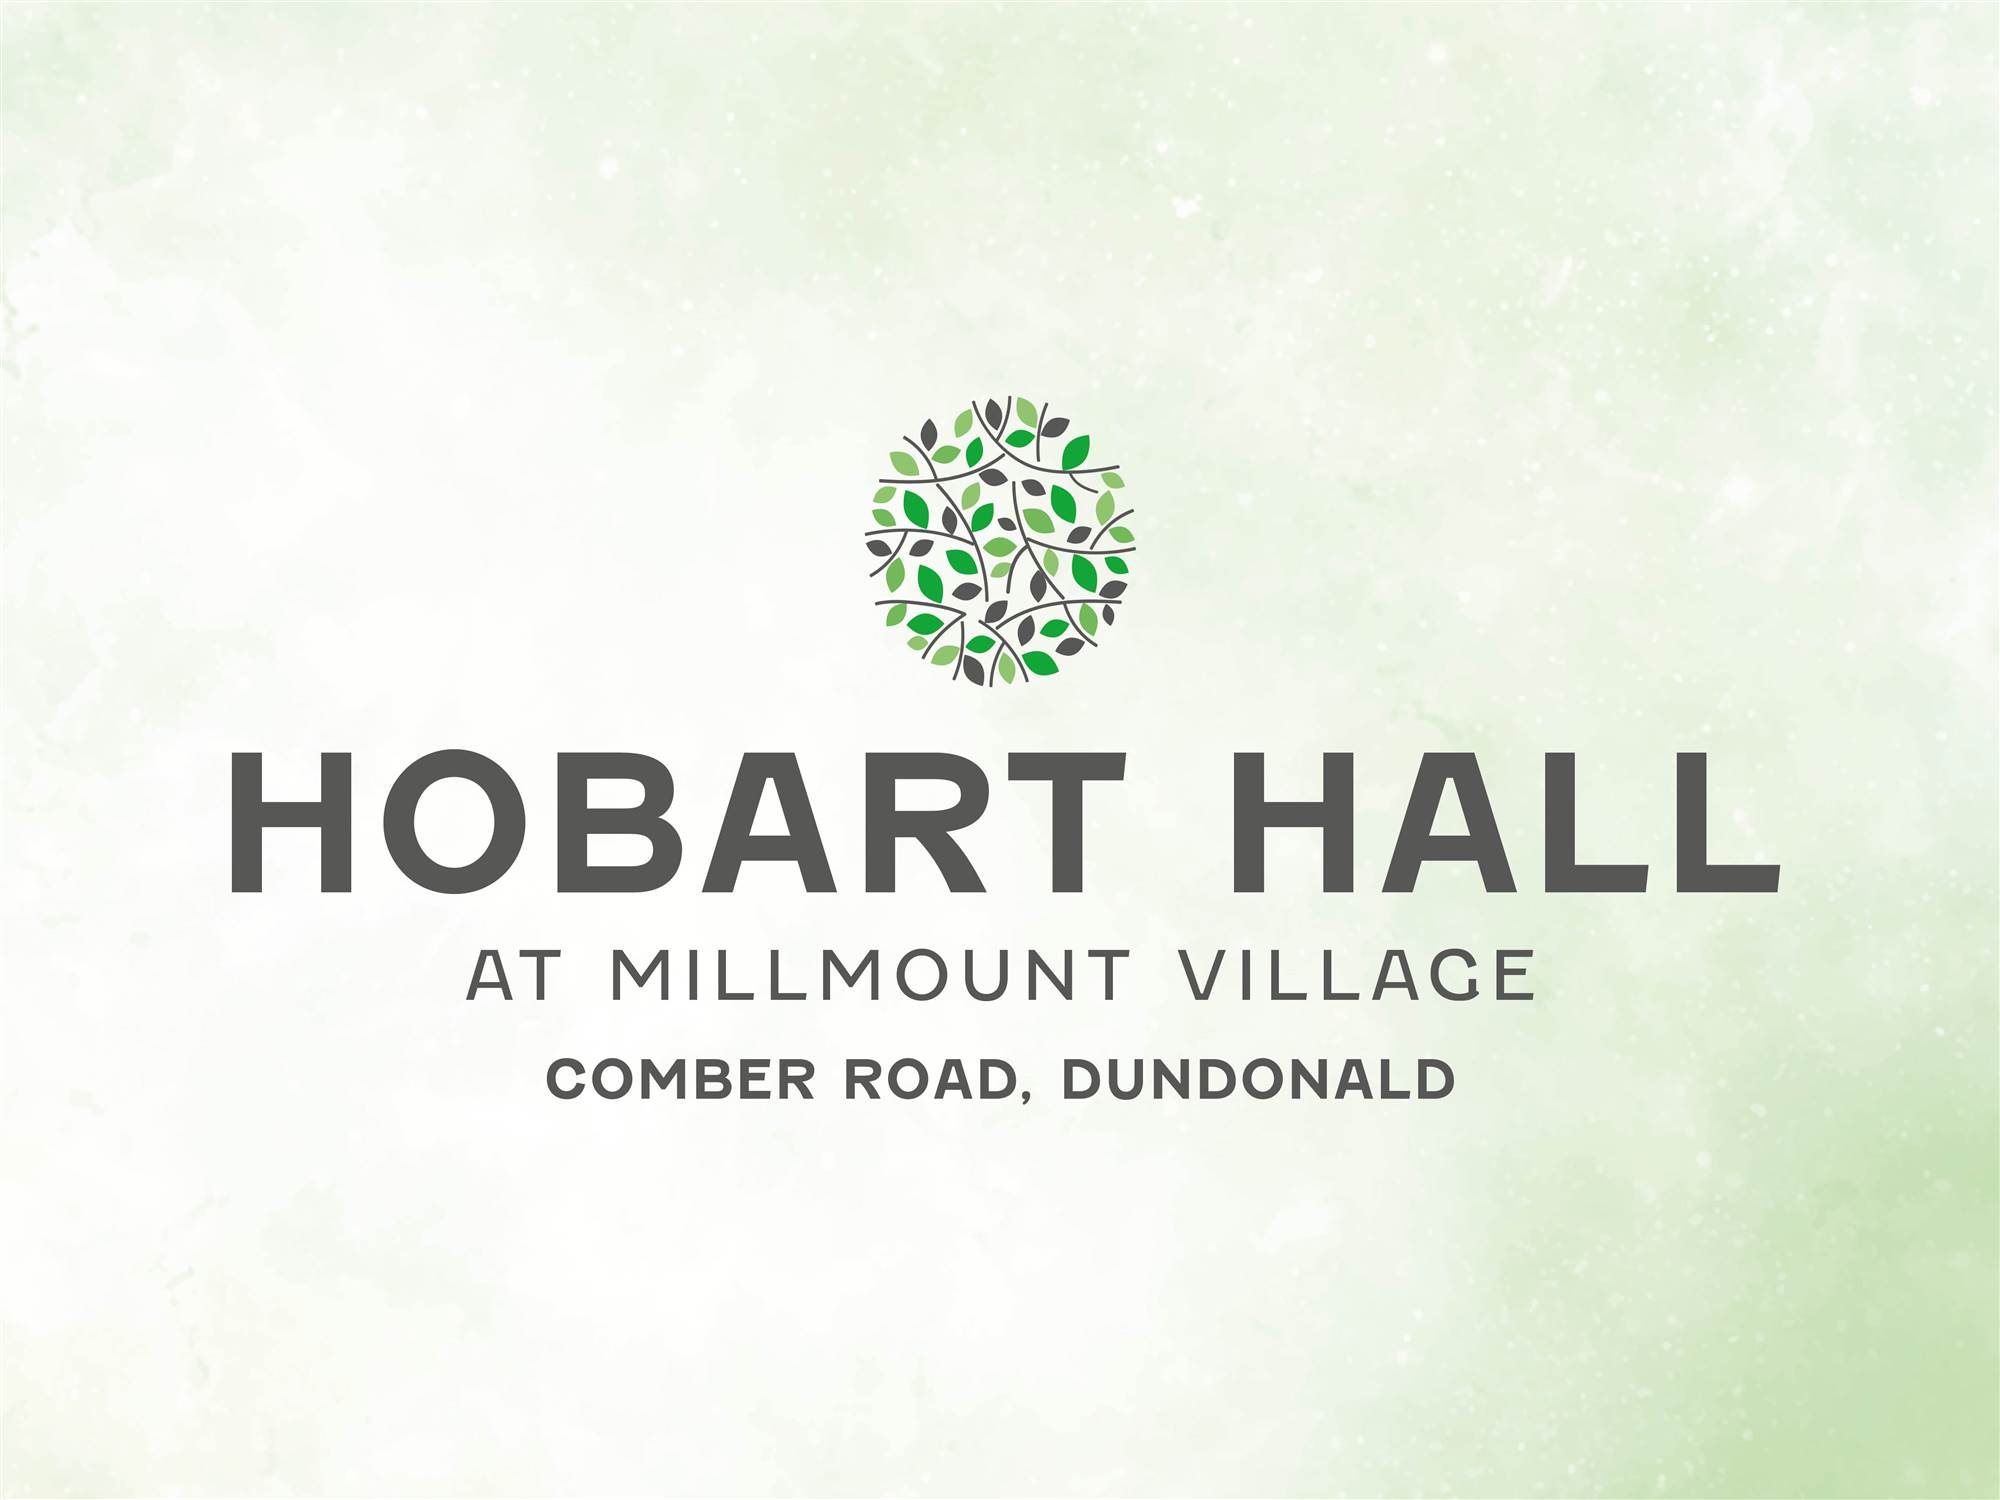 5 Hobart Hall at Millmount Village